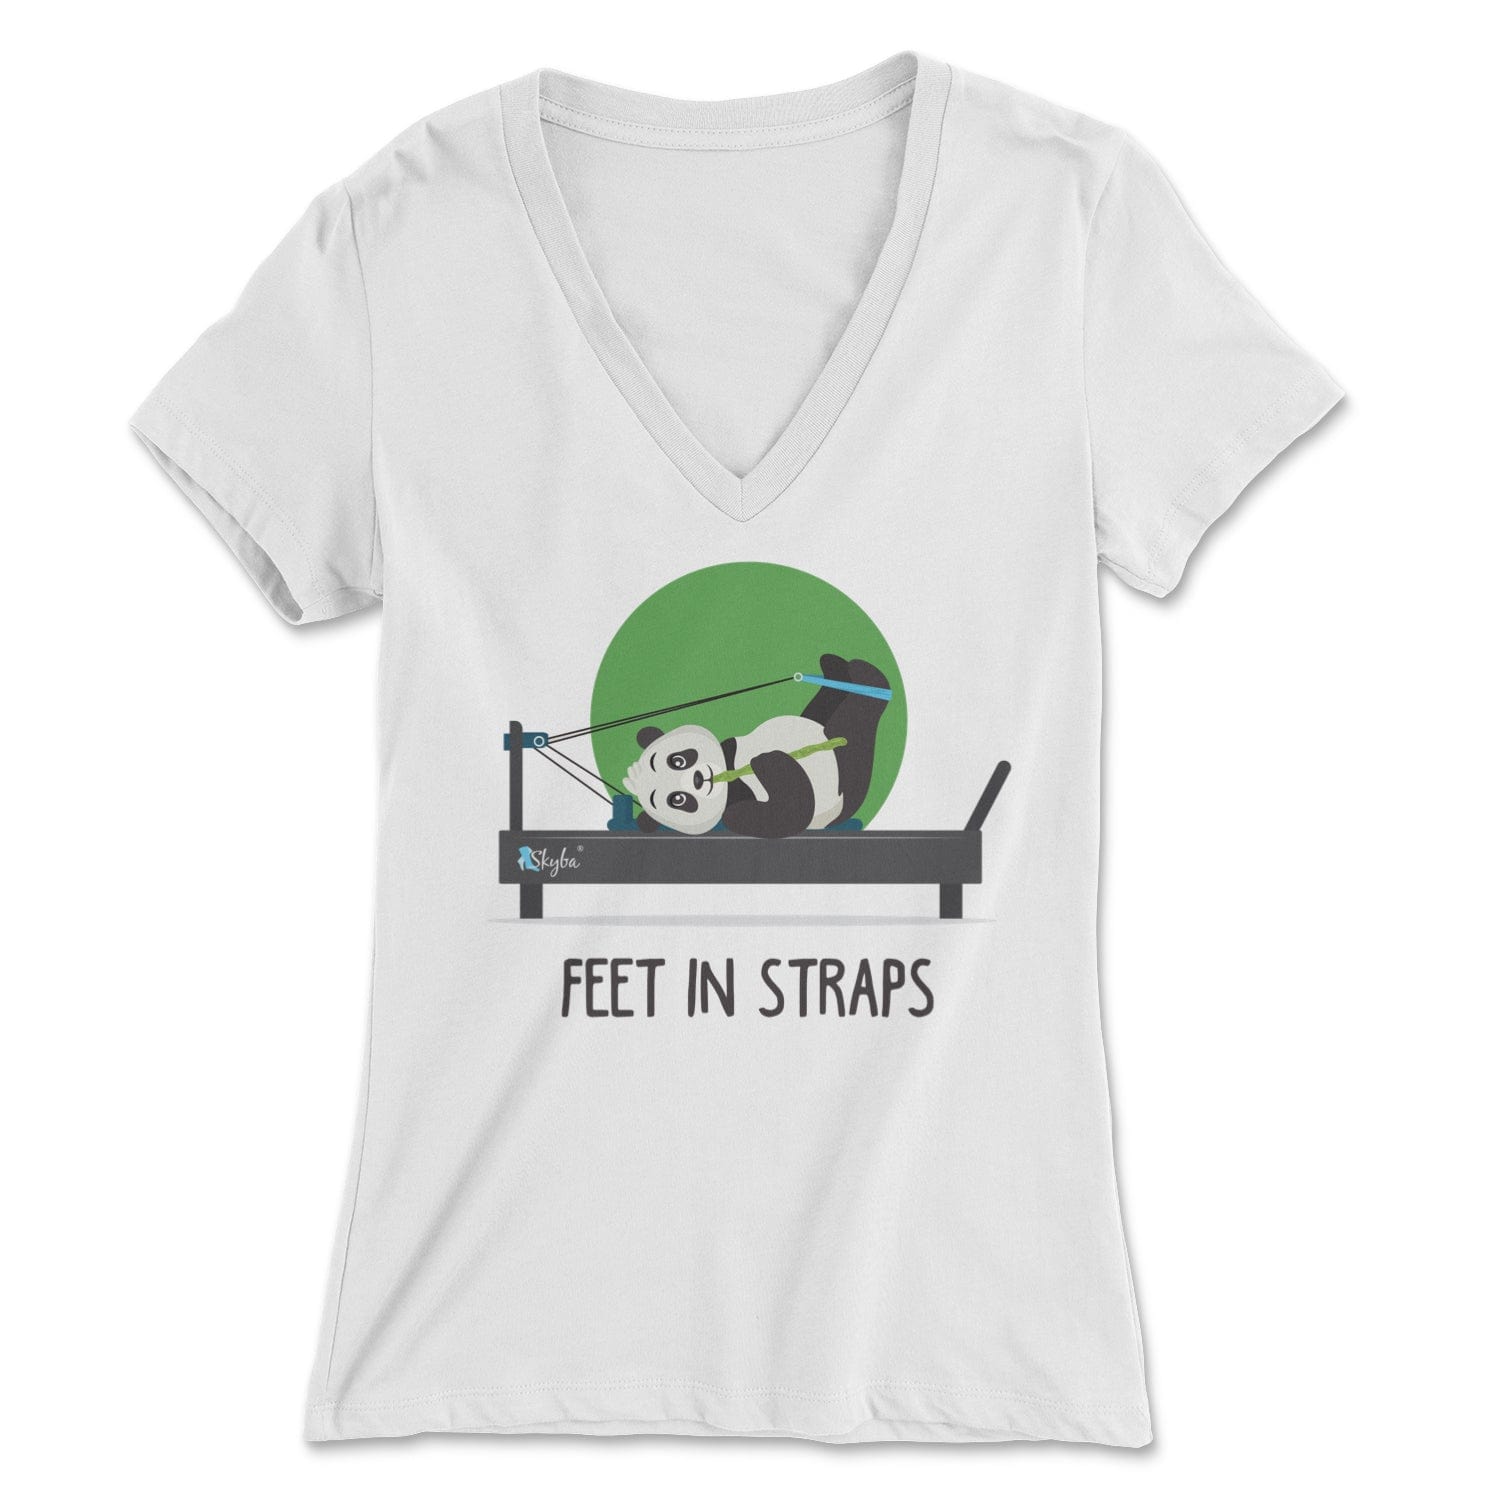 "Feet in Straps" Panda on the Reformer - Women's V-Neck Tee Skyba Print Material